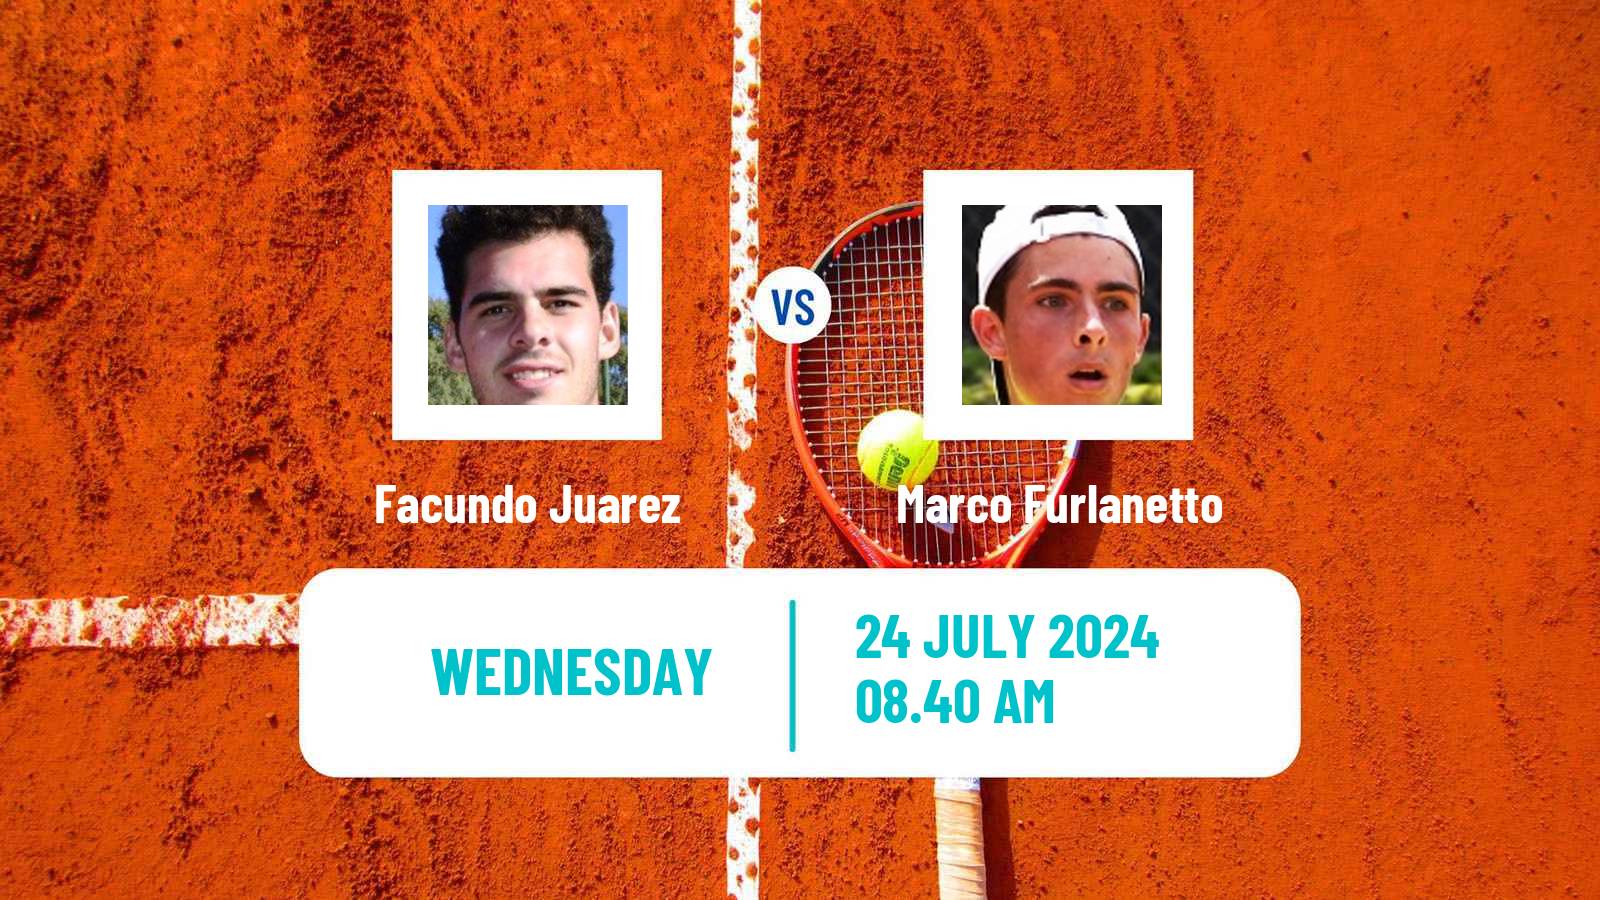 Tennis ITF M15 Perugia Men Facundo Juarez - Marco Furlanetto